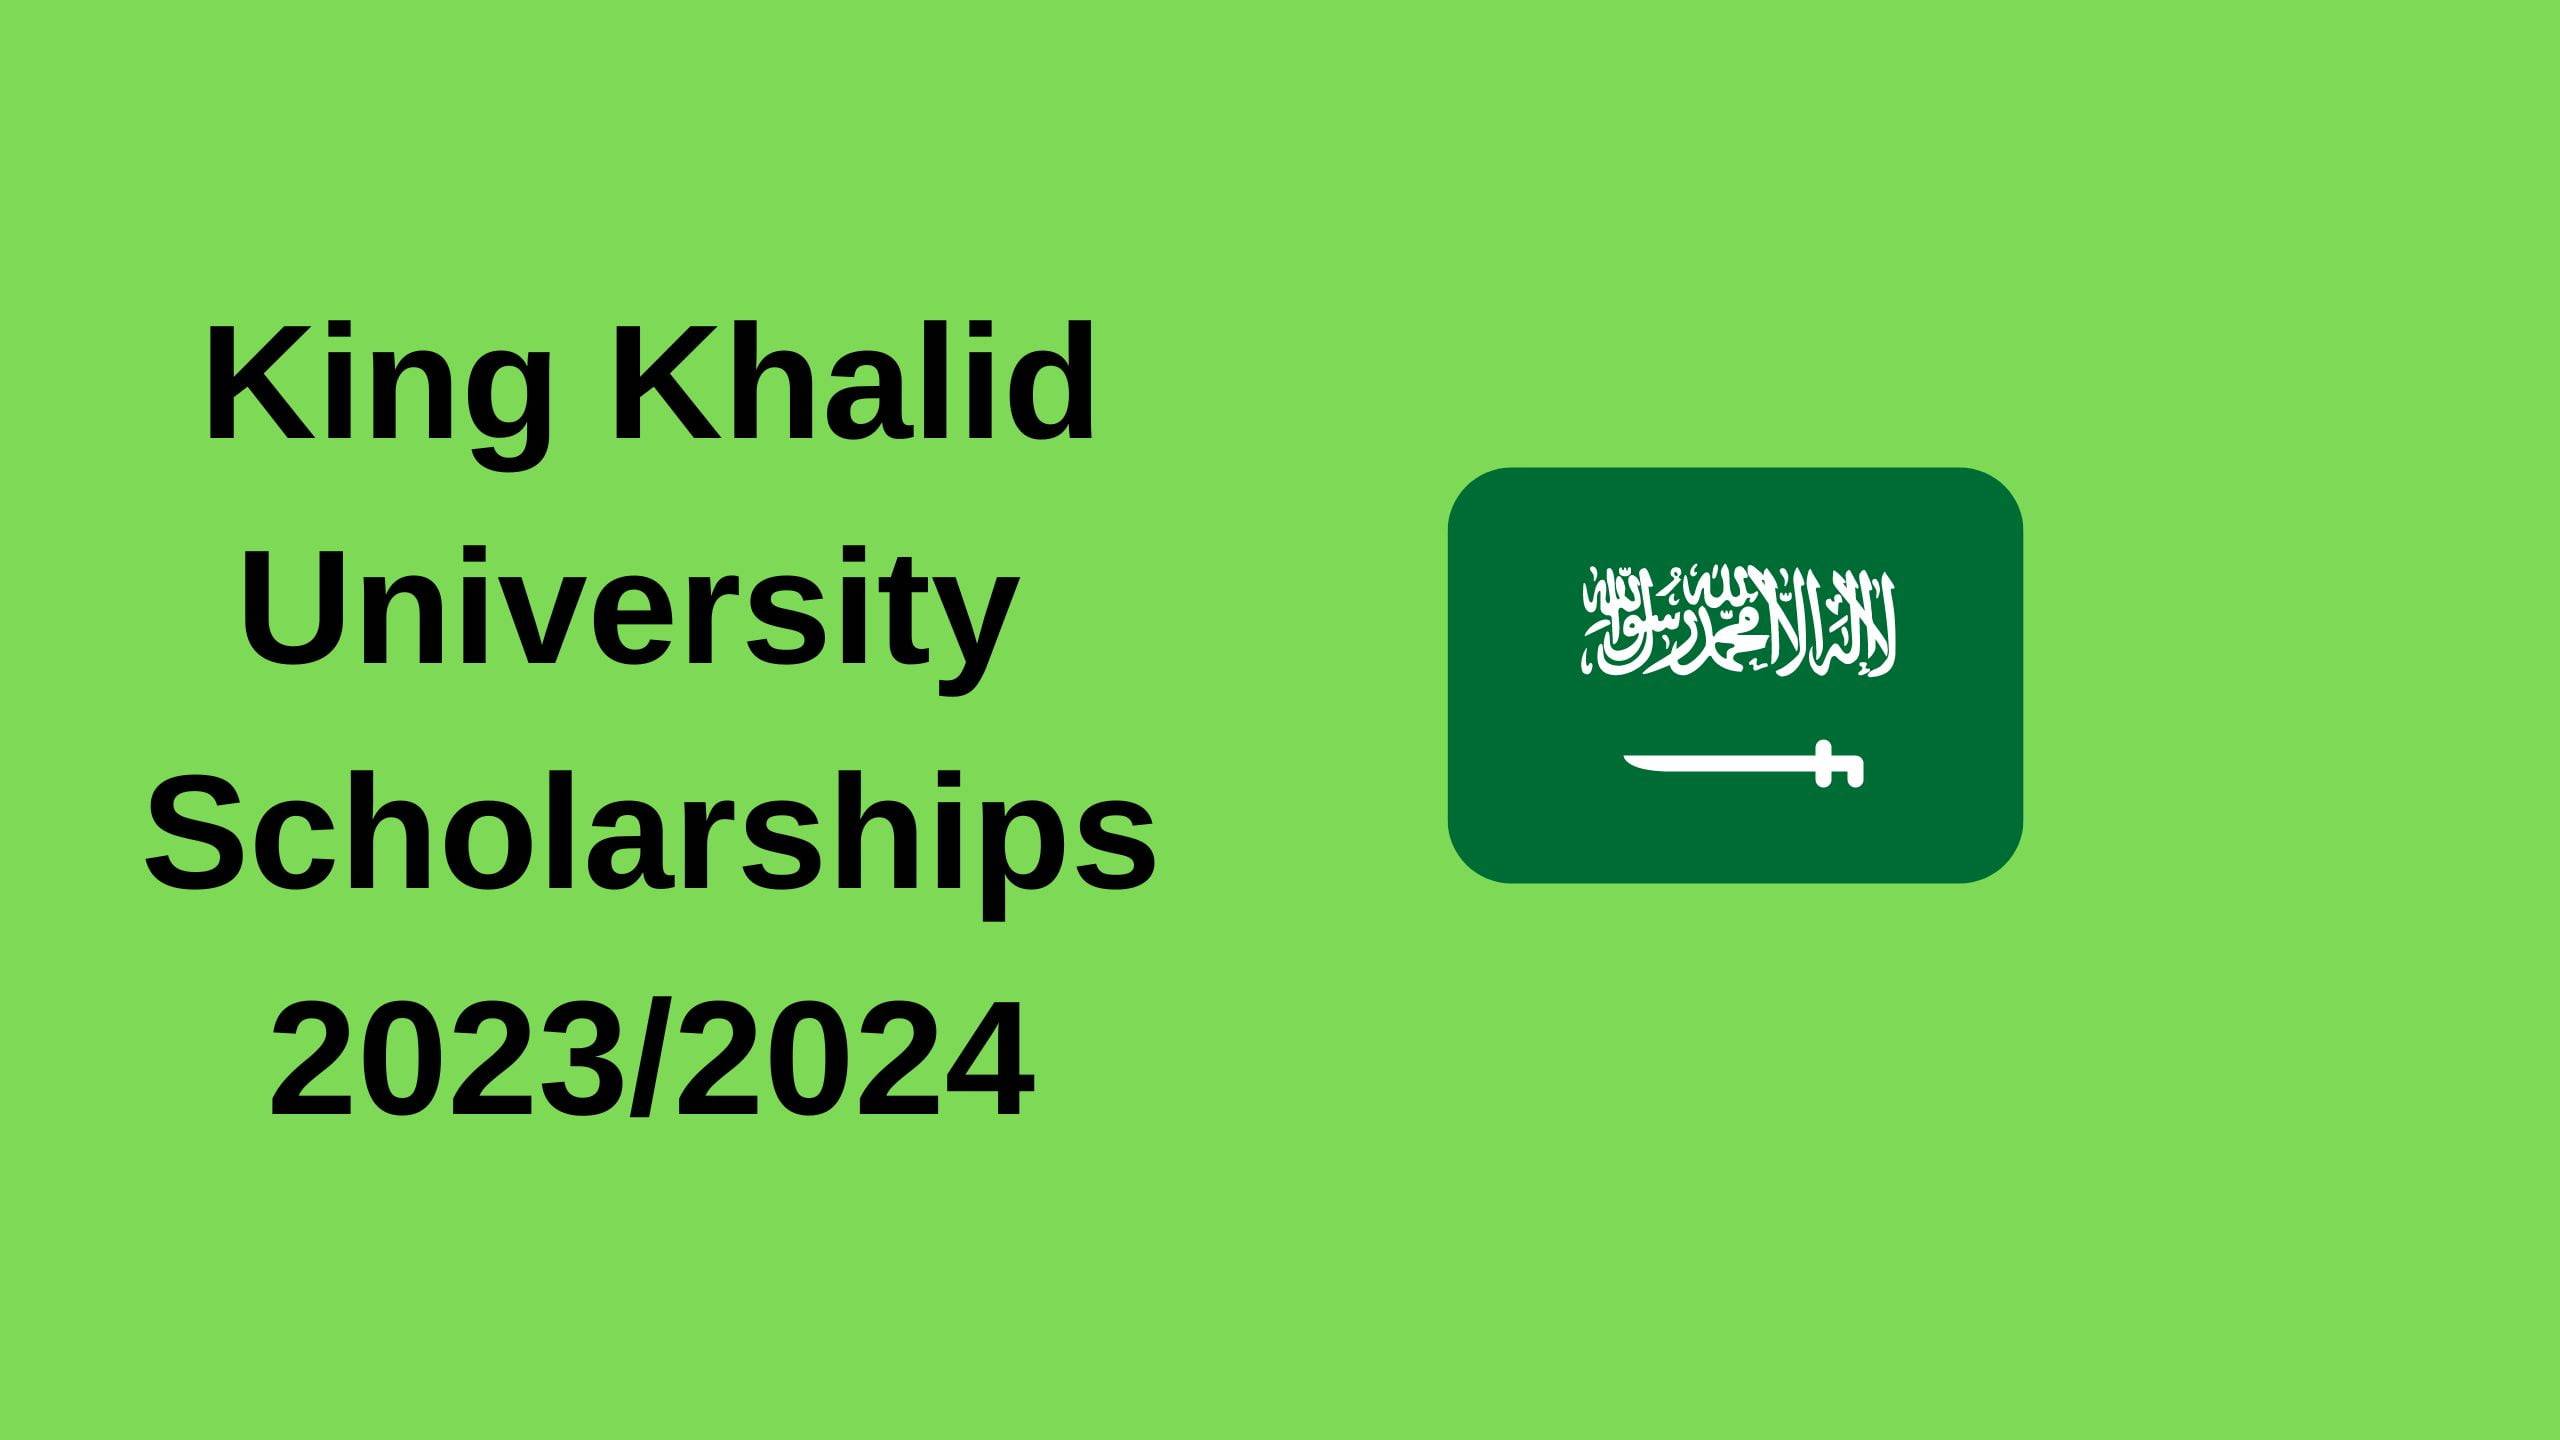 King Khalid University Scholarships 2023/2024